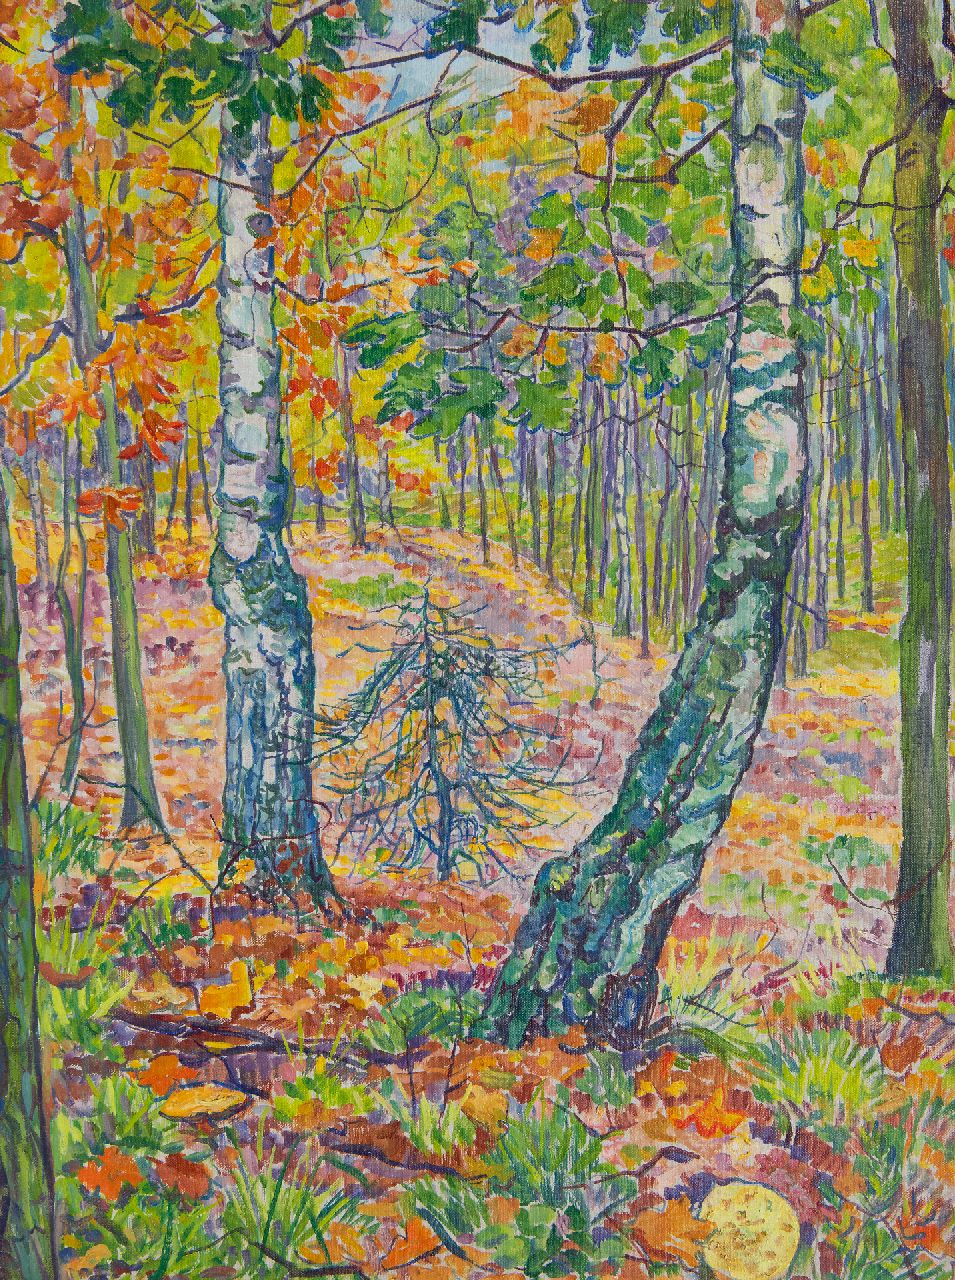 Pijpers E.E.  | 'Edith' Elizabeth Pijpers, Herbstwald, Öl auf Leinwand 60,2 x 45,3 cm